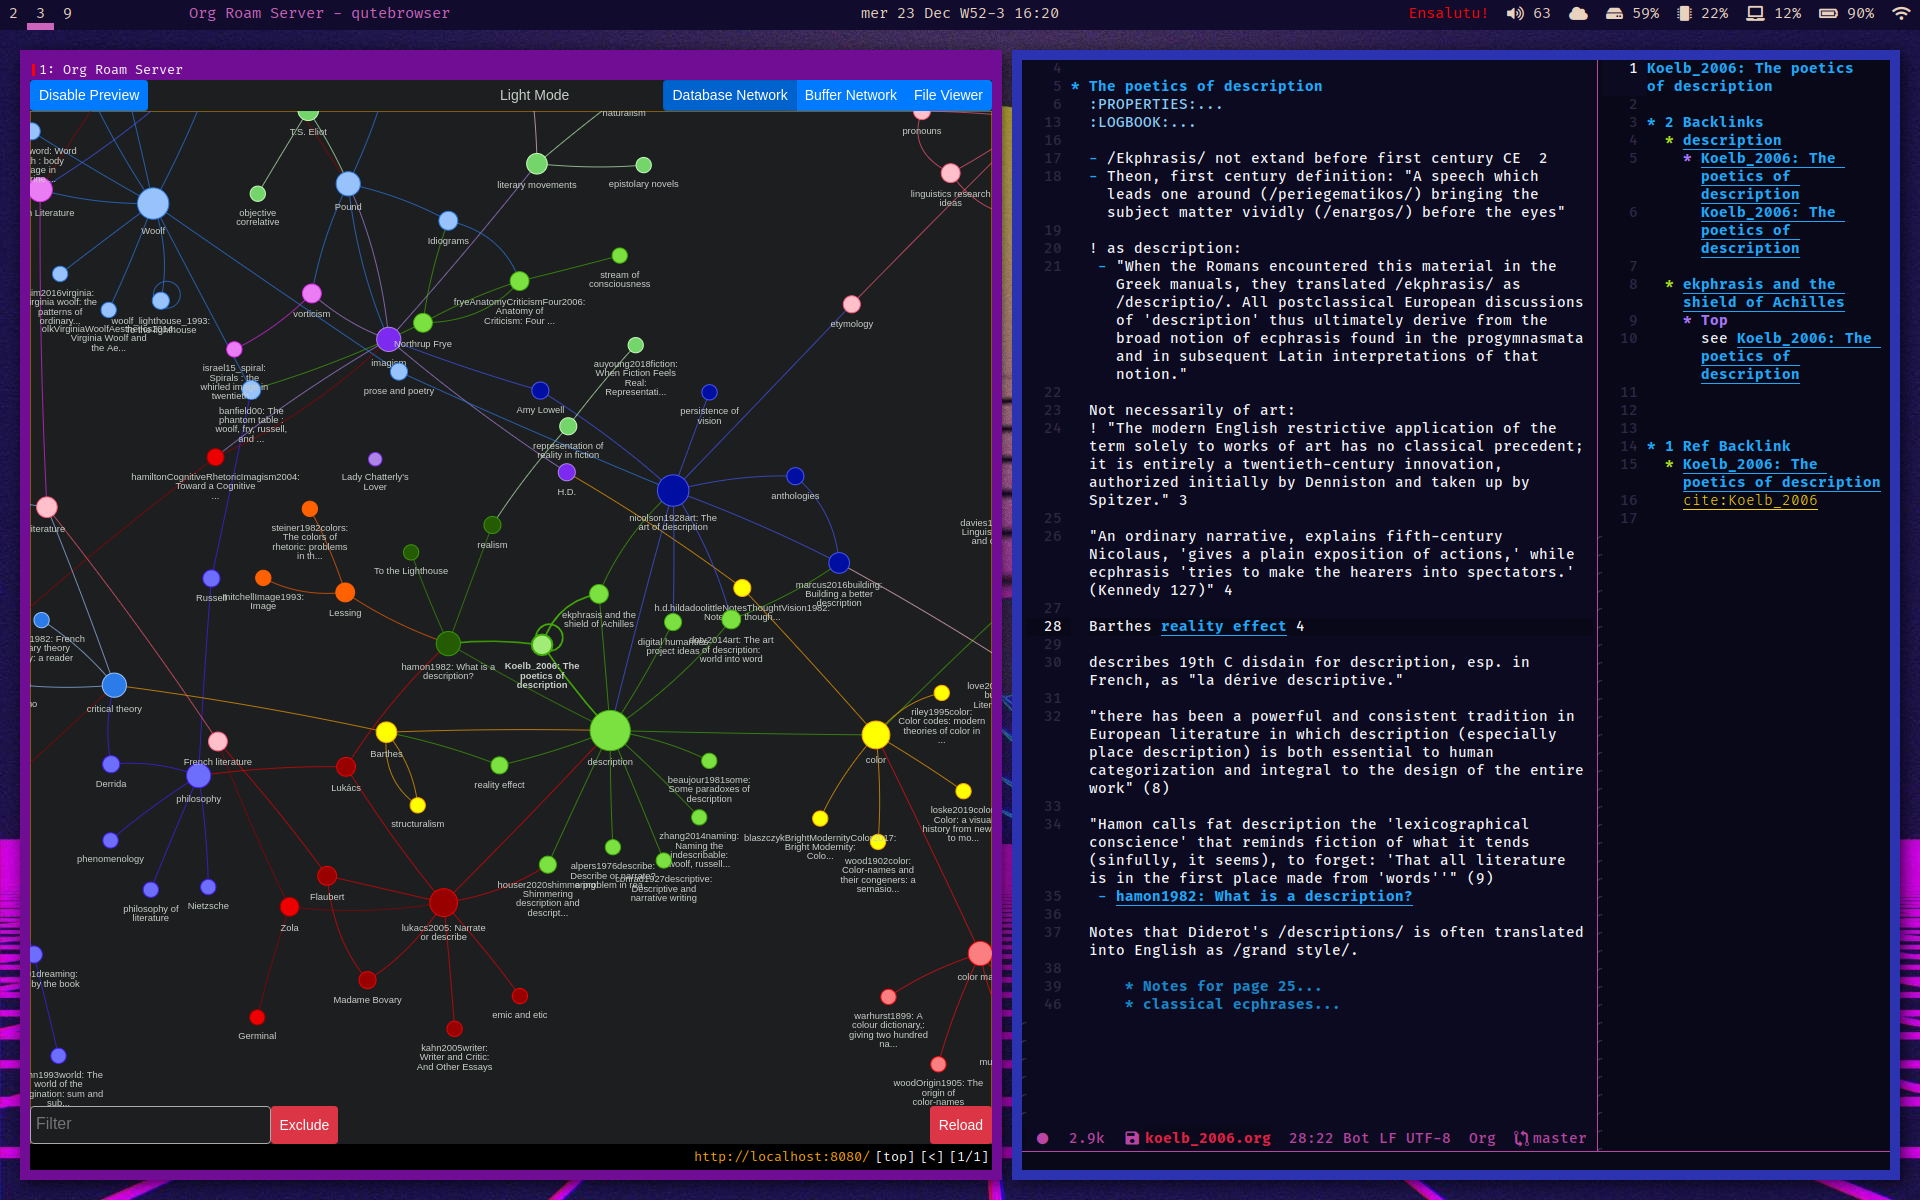 Network visualization of my notes, via Org-roam-server